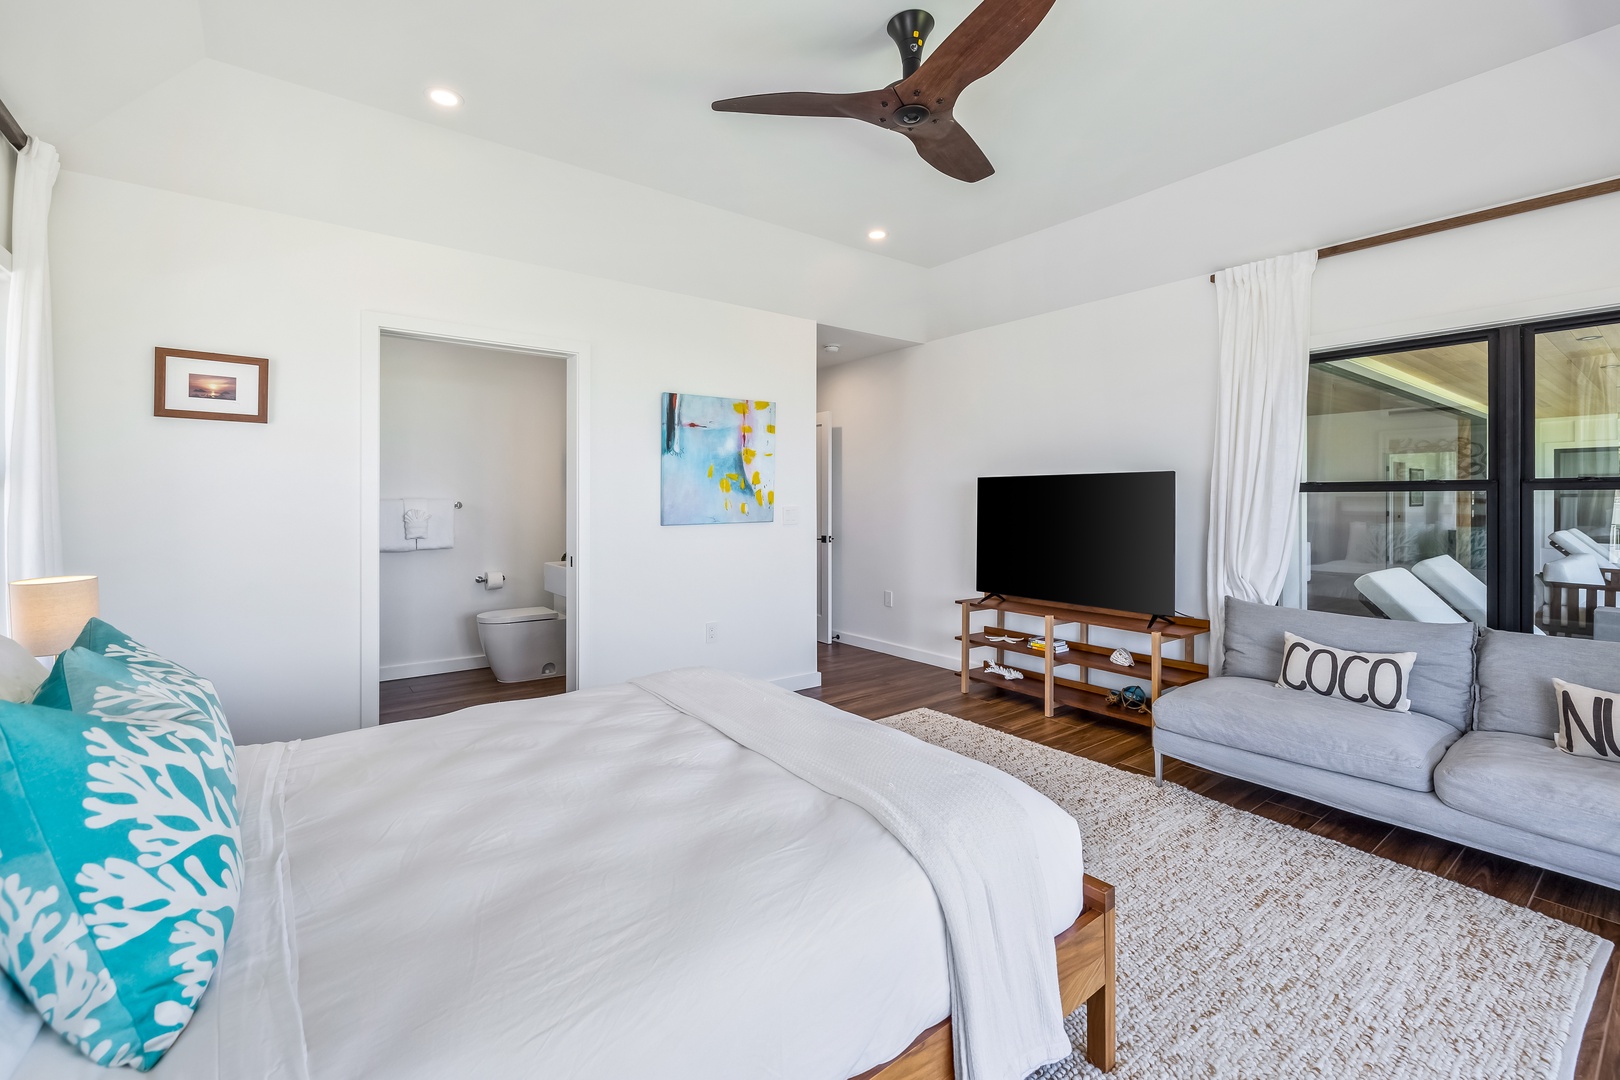 Kailua Vacation Rentals, Kailua Beach Villa - Makai South suite and access to ensuite bathroom